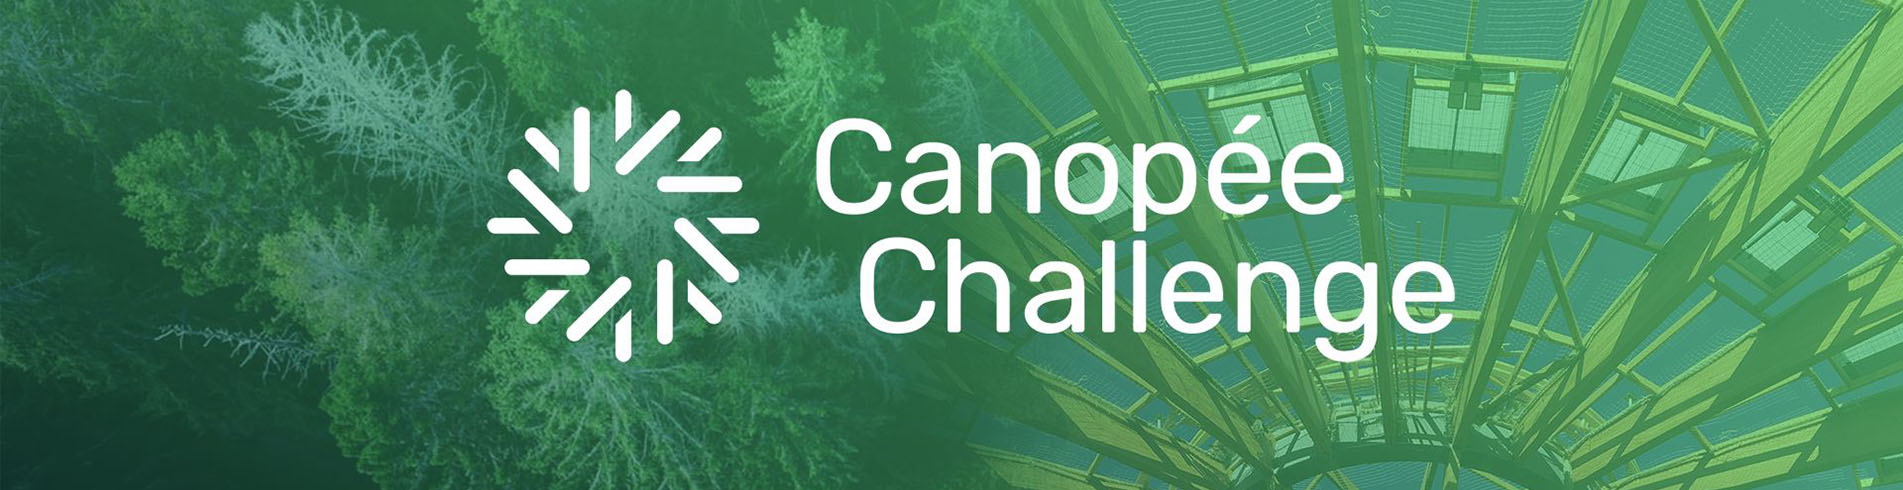 Visuel canopée challenge